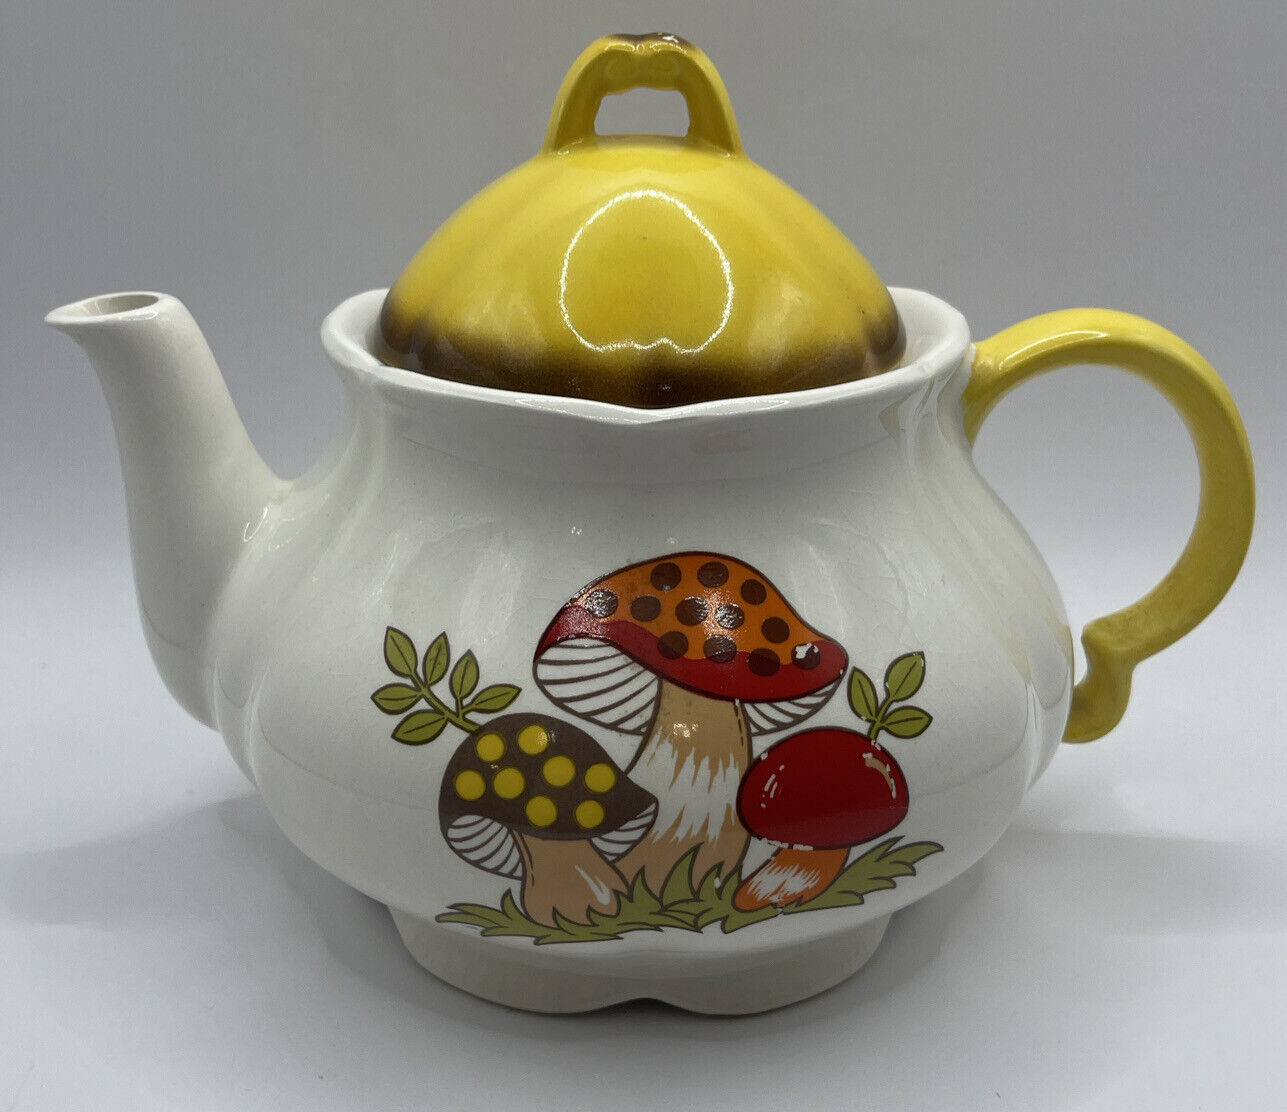 NOS Vintage 1979 Sears Roebuck and Co. Merry Mushroom Ceramic Teapot